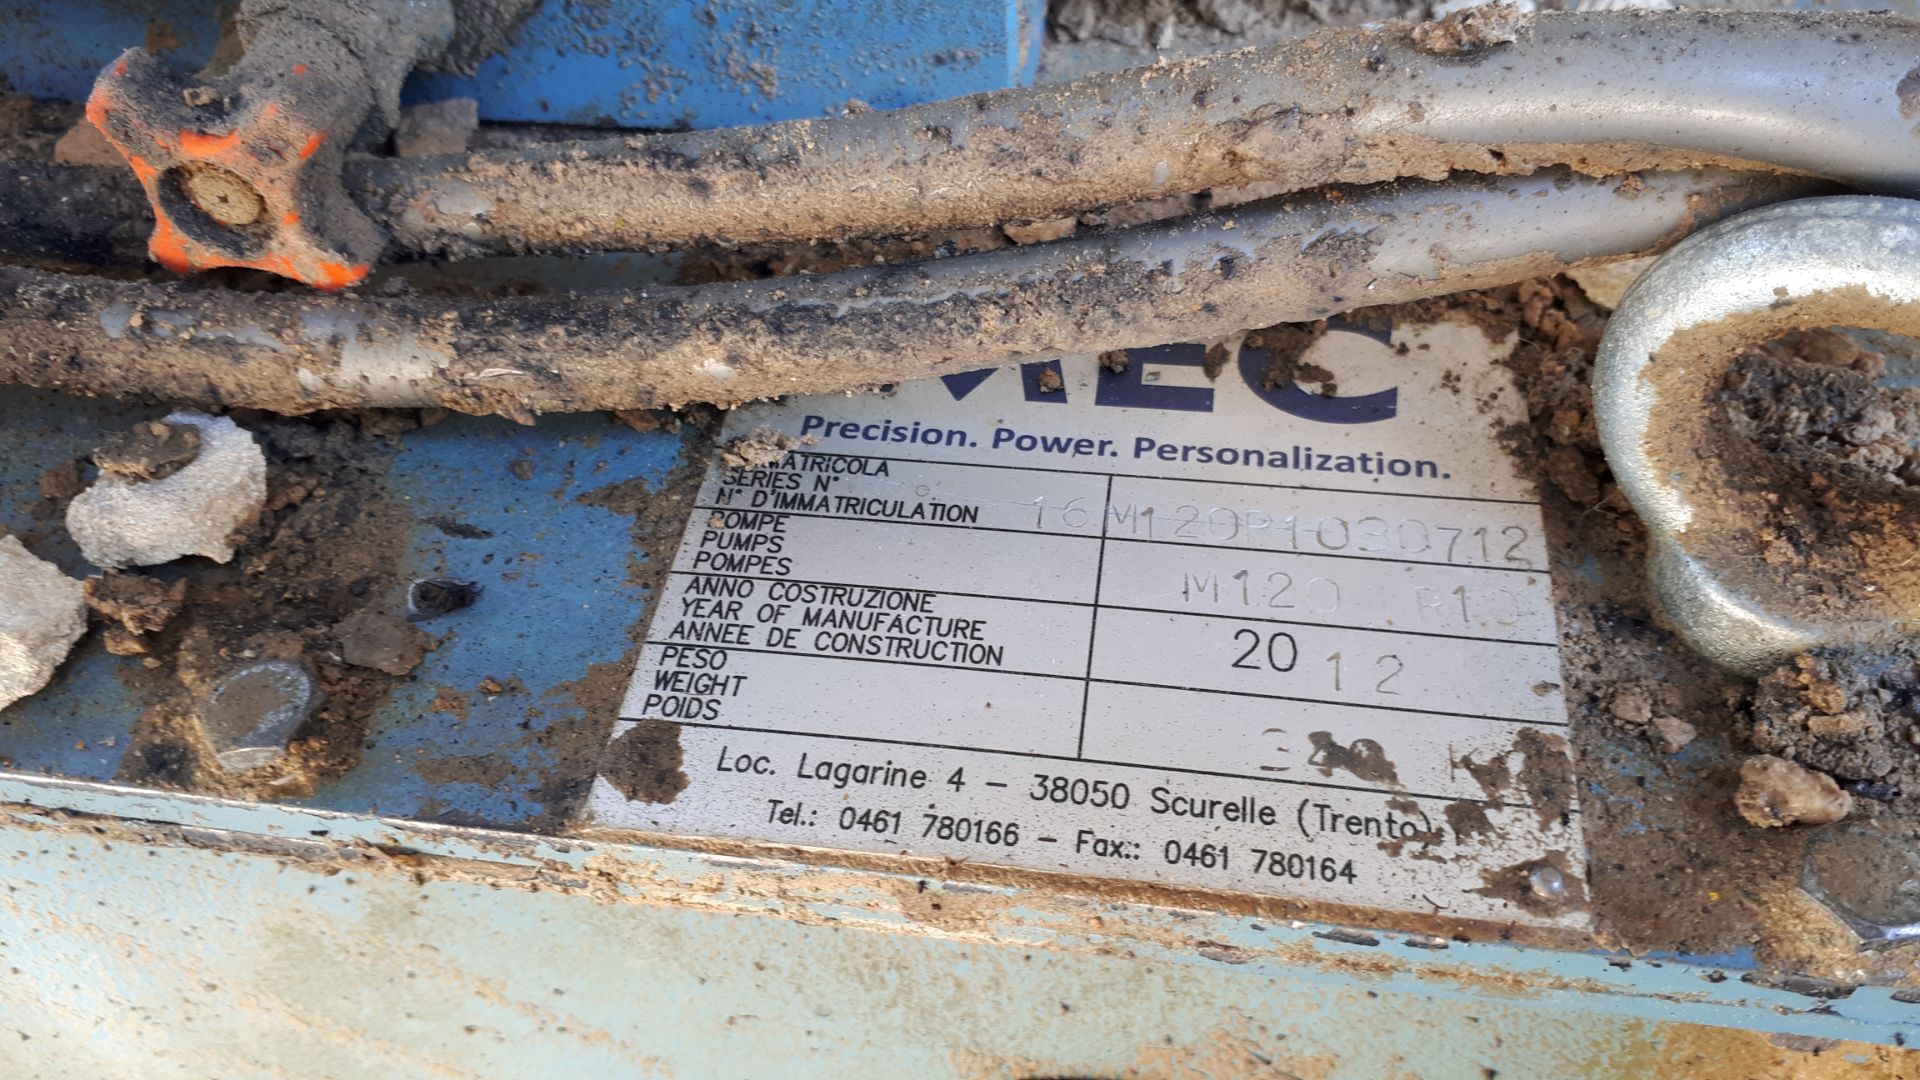 MEC C320 Stone Splitter/Guillotine machine, Serial Number P0932600712 (2012). Damaged operator - Image 9 of 20